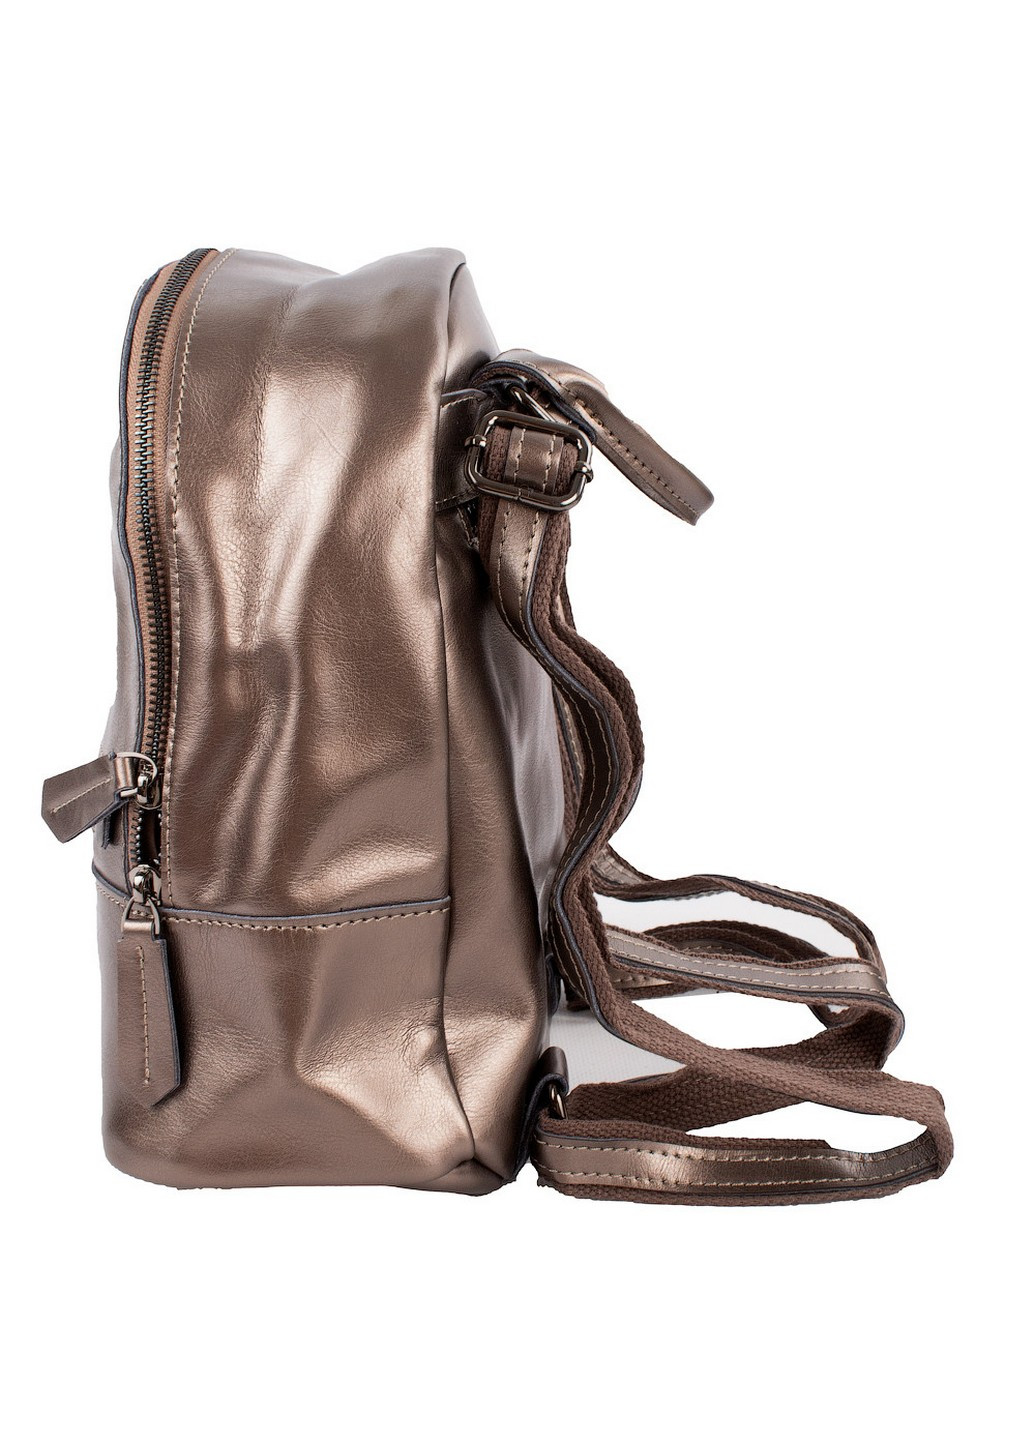 Шкіряний рюкзак 23х26х12 см Valiria Fashion (253102346)